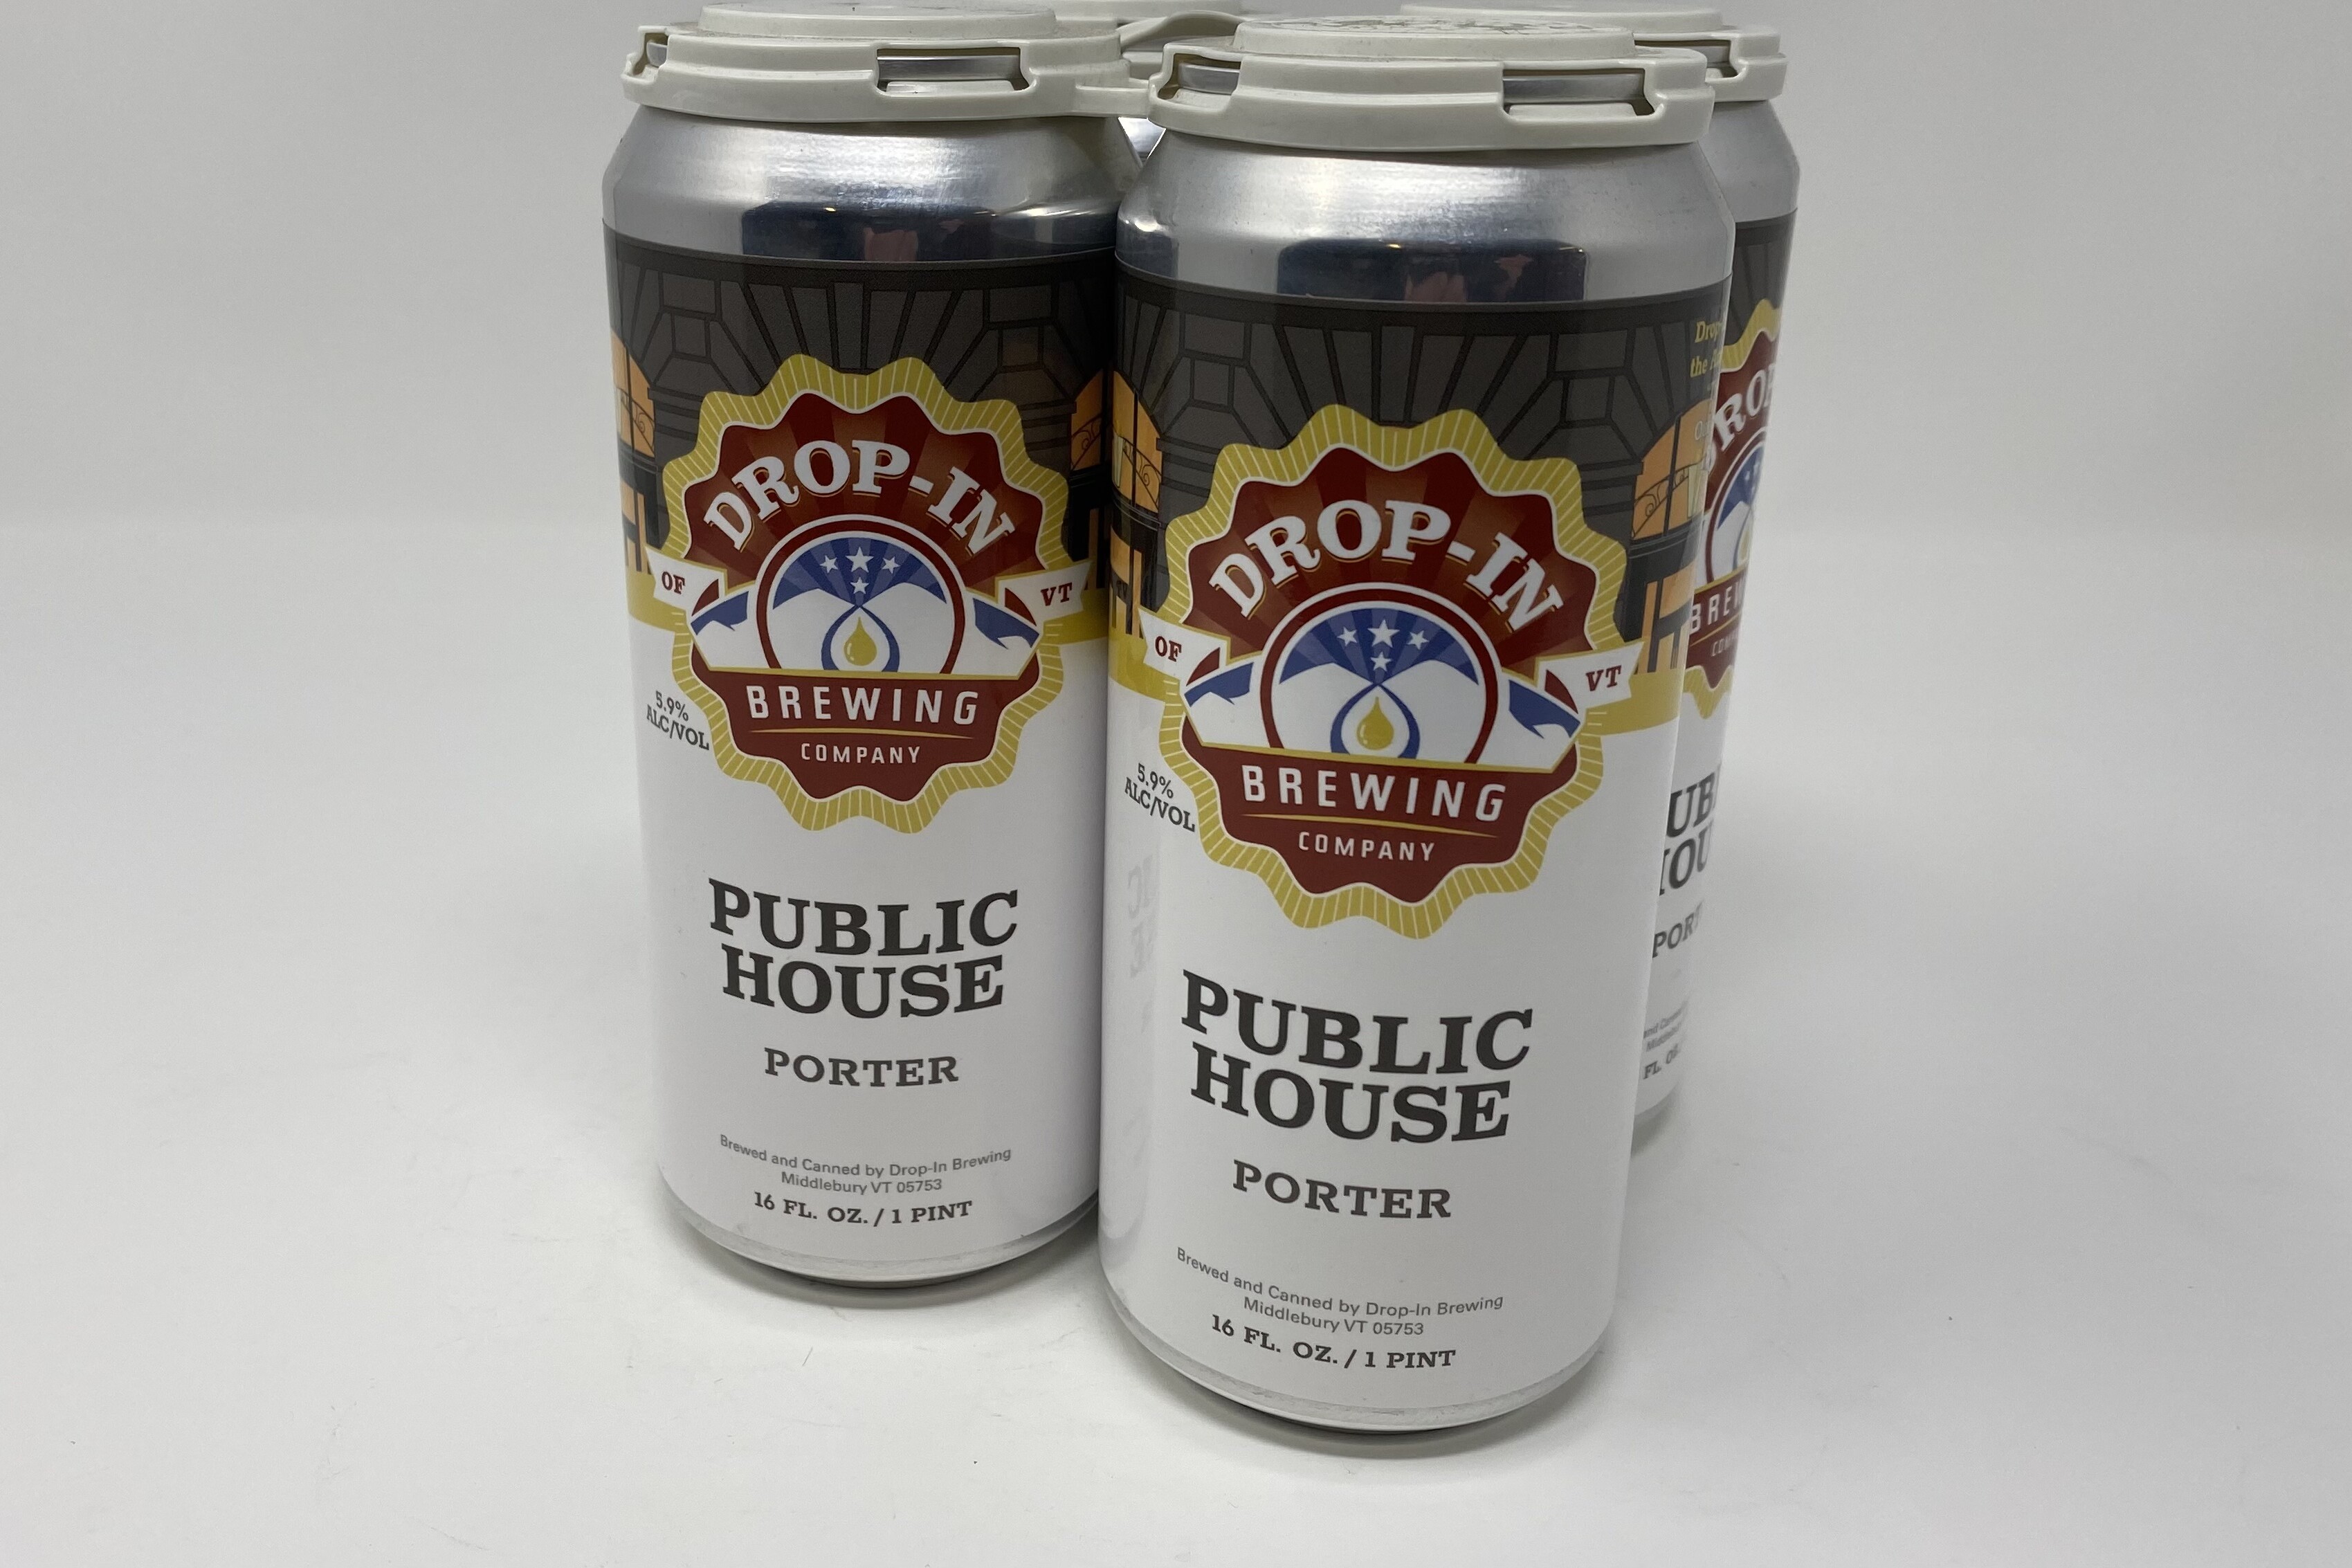 Drop-In Brewing Company, Public House Porter